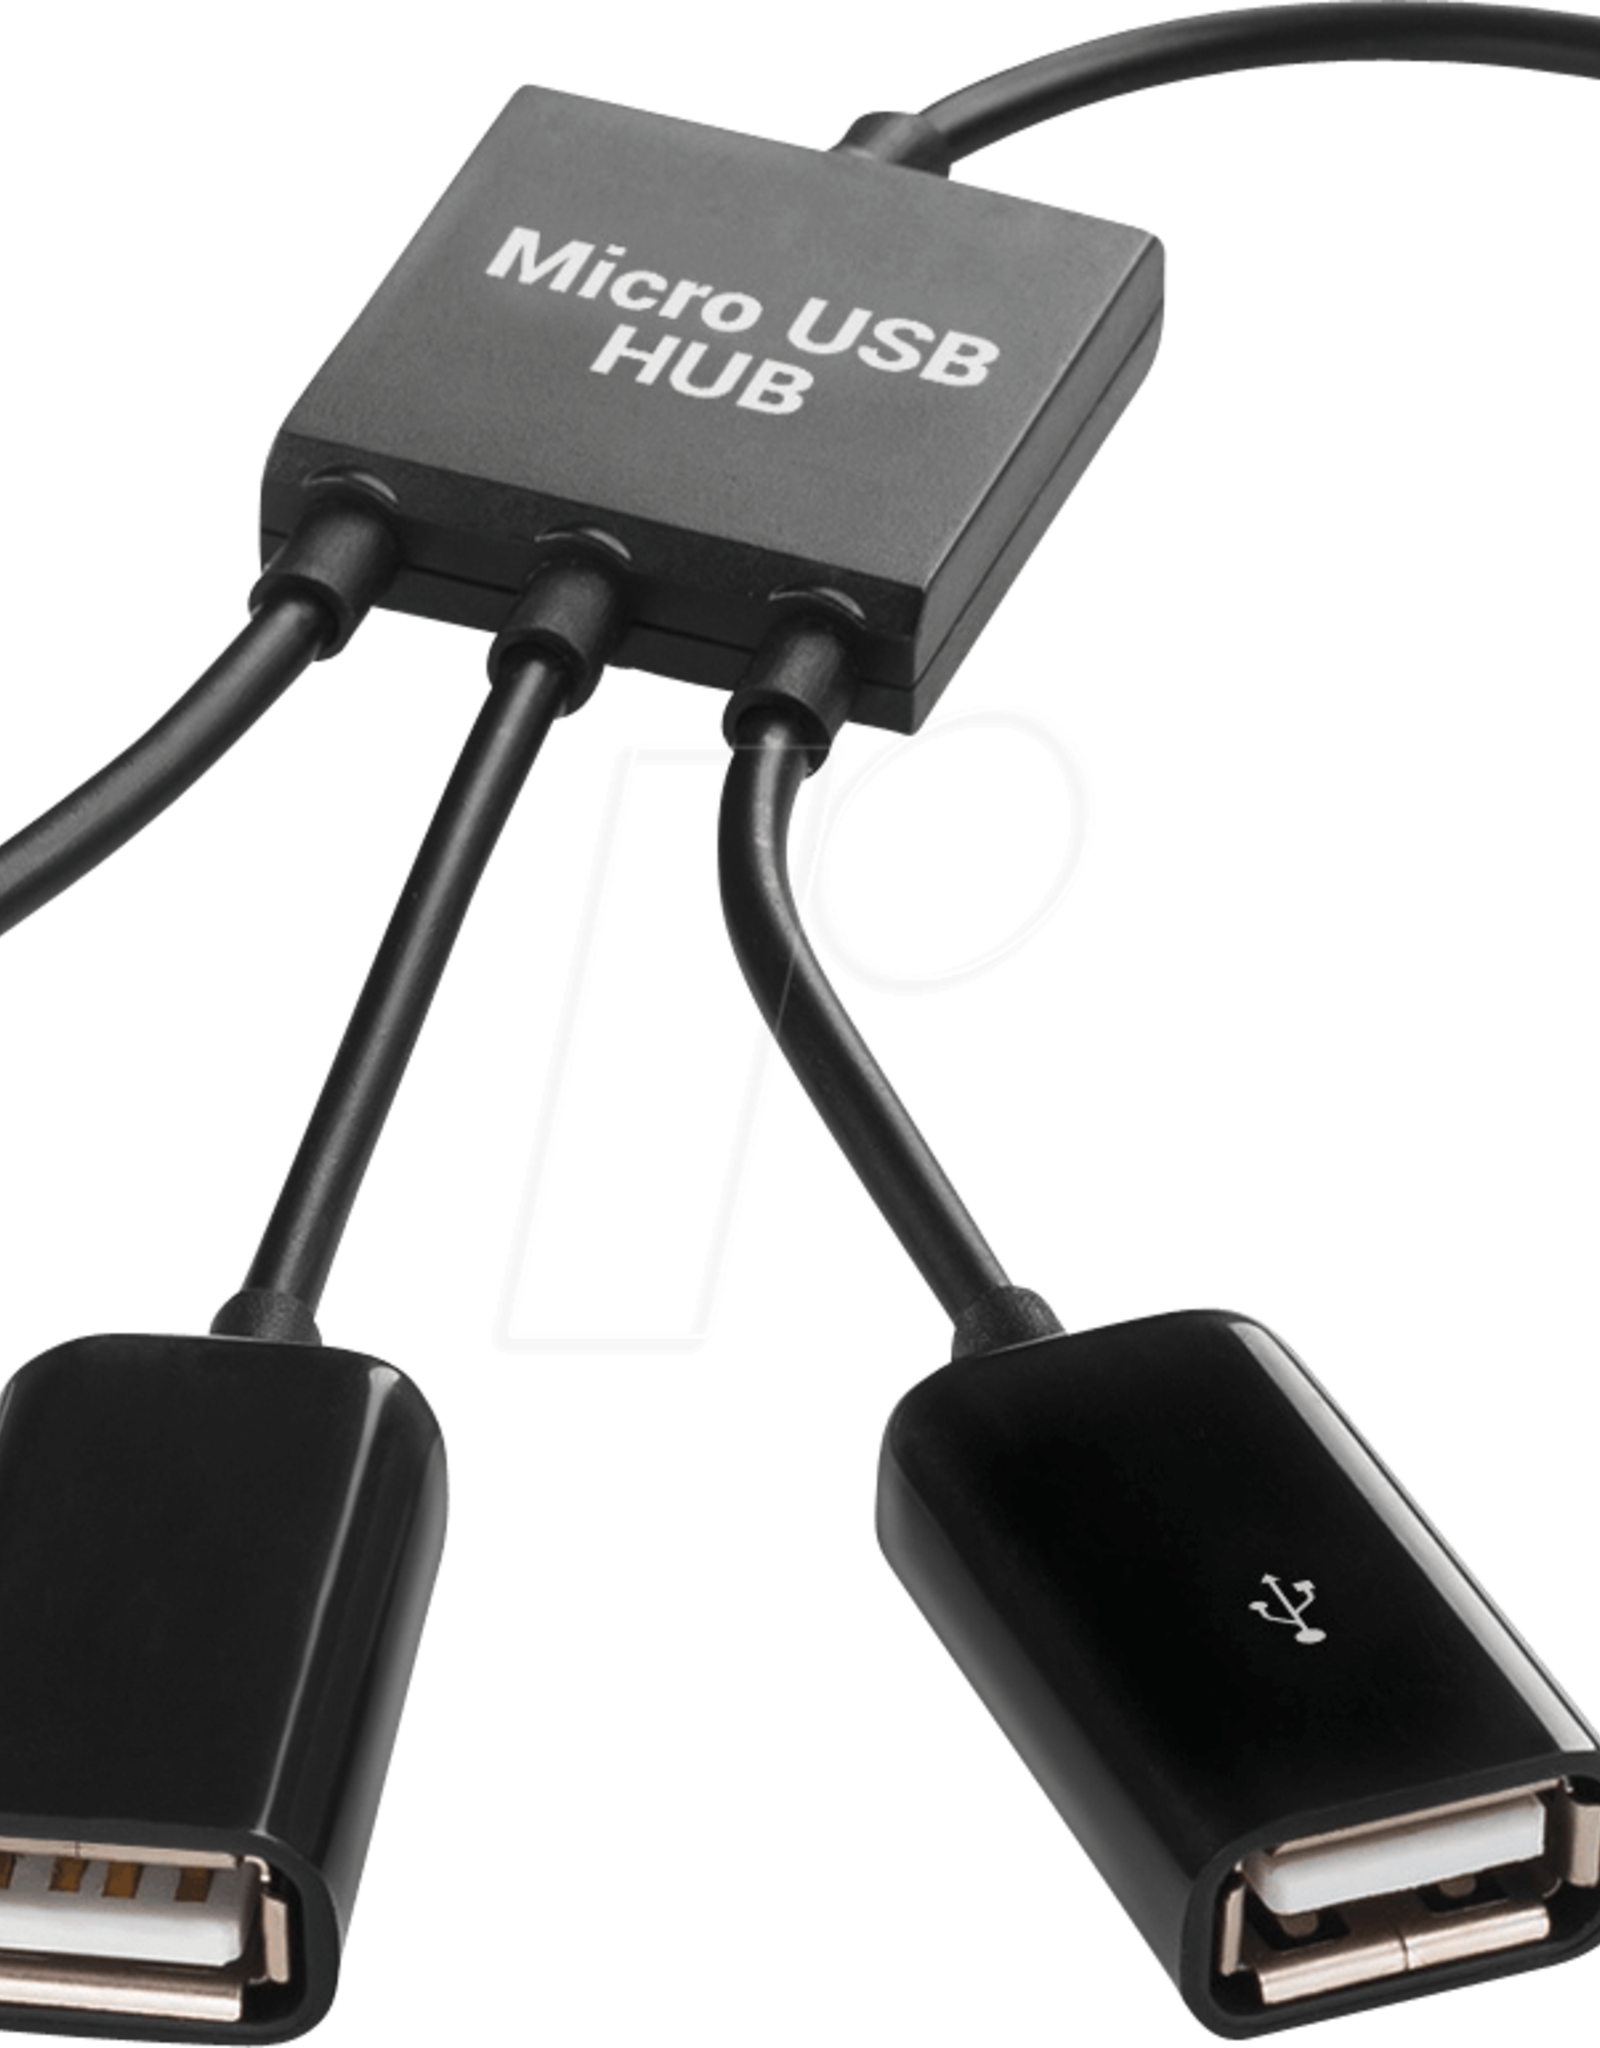 Micro USB OTG HUB